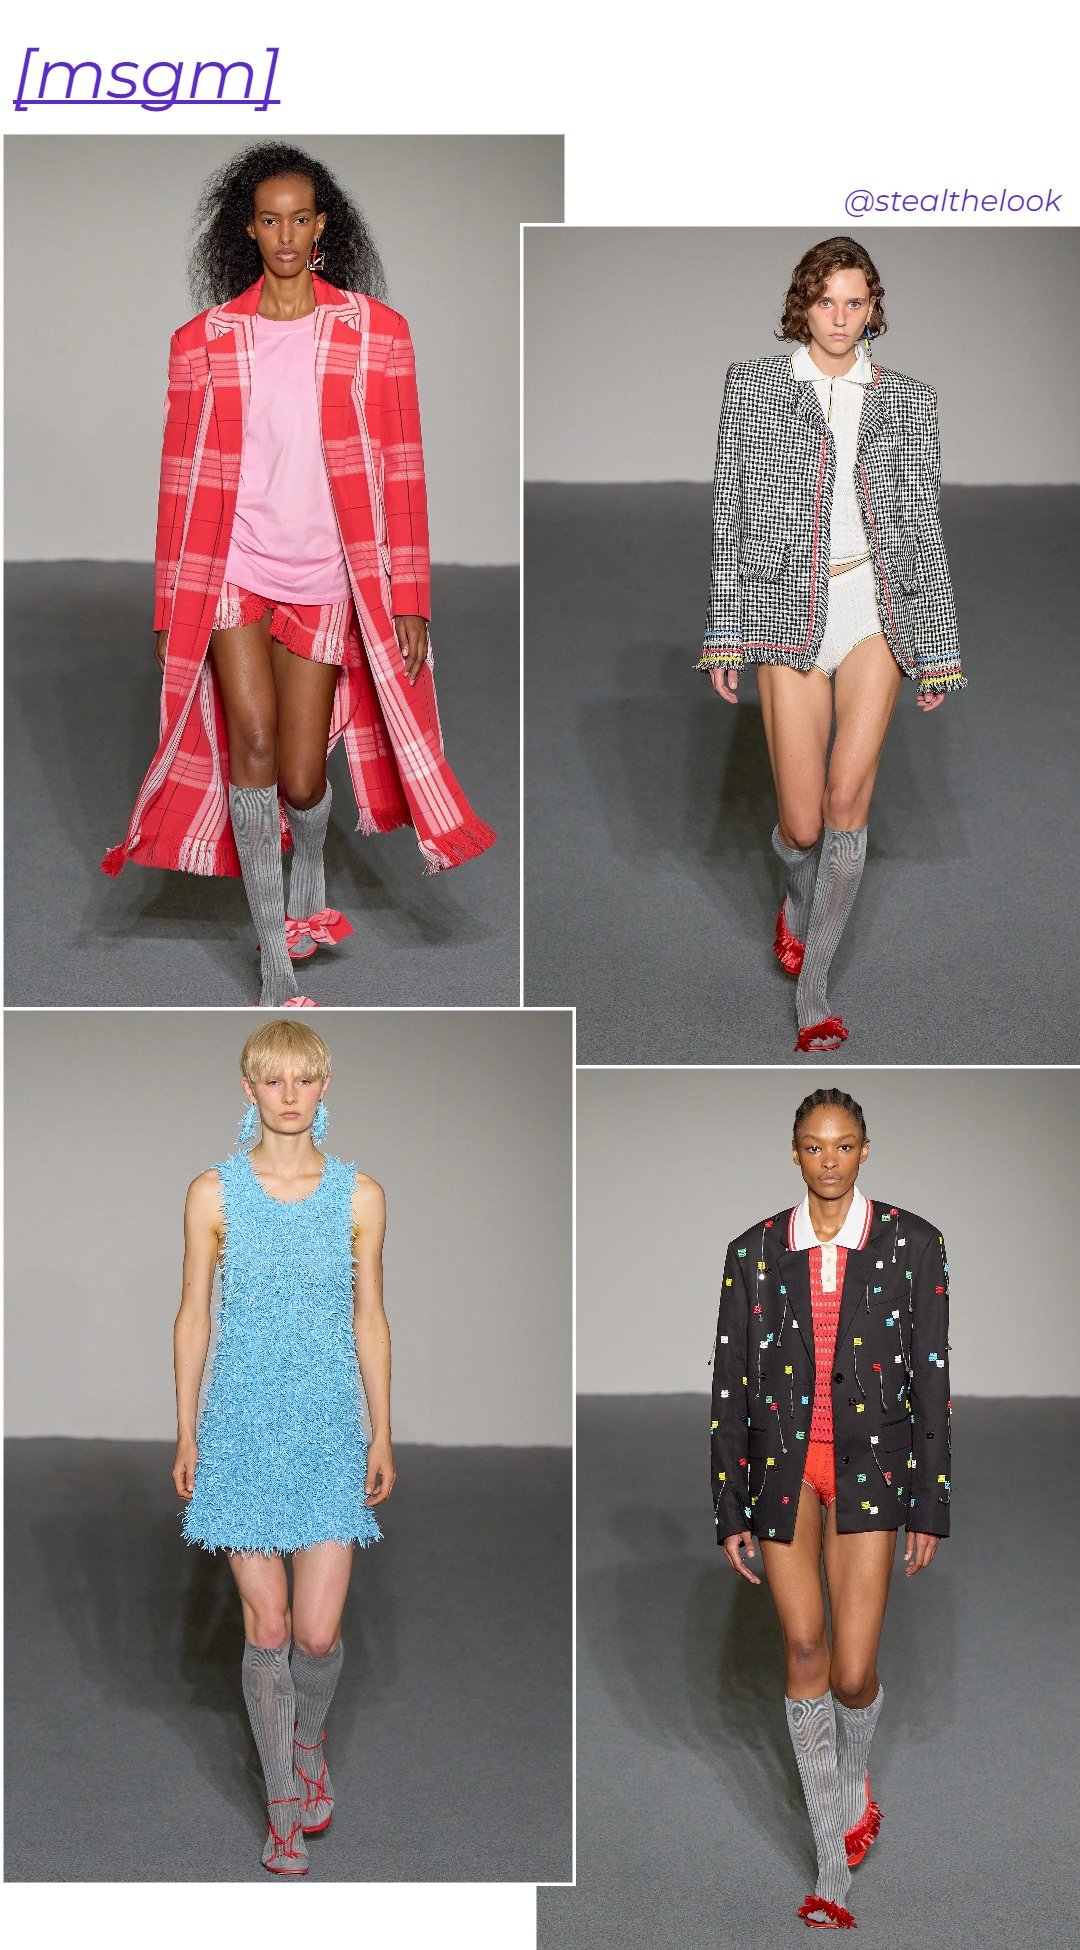 MSGM - roupas diversas - Milano Fashion Week - primavera - colagem de imagens - https://stealthelook.com.br